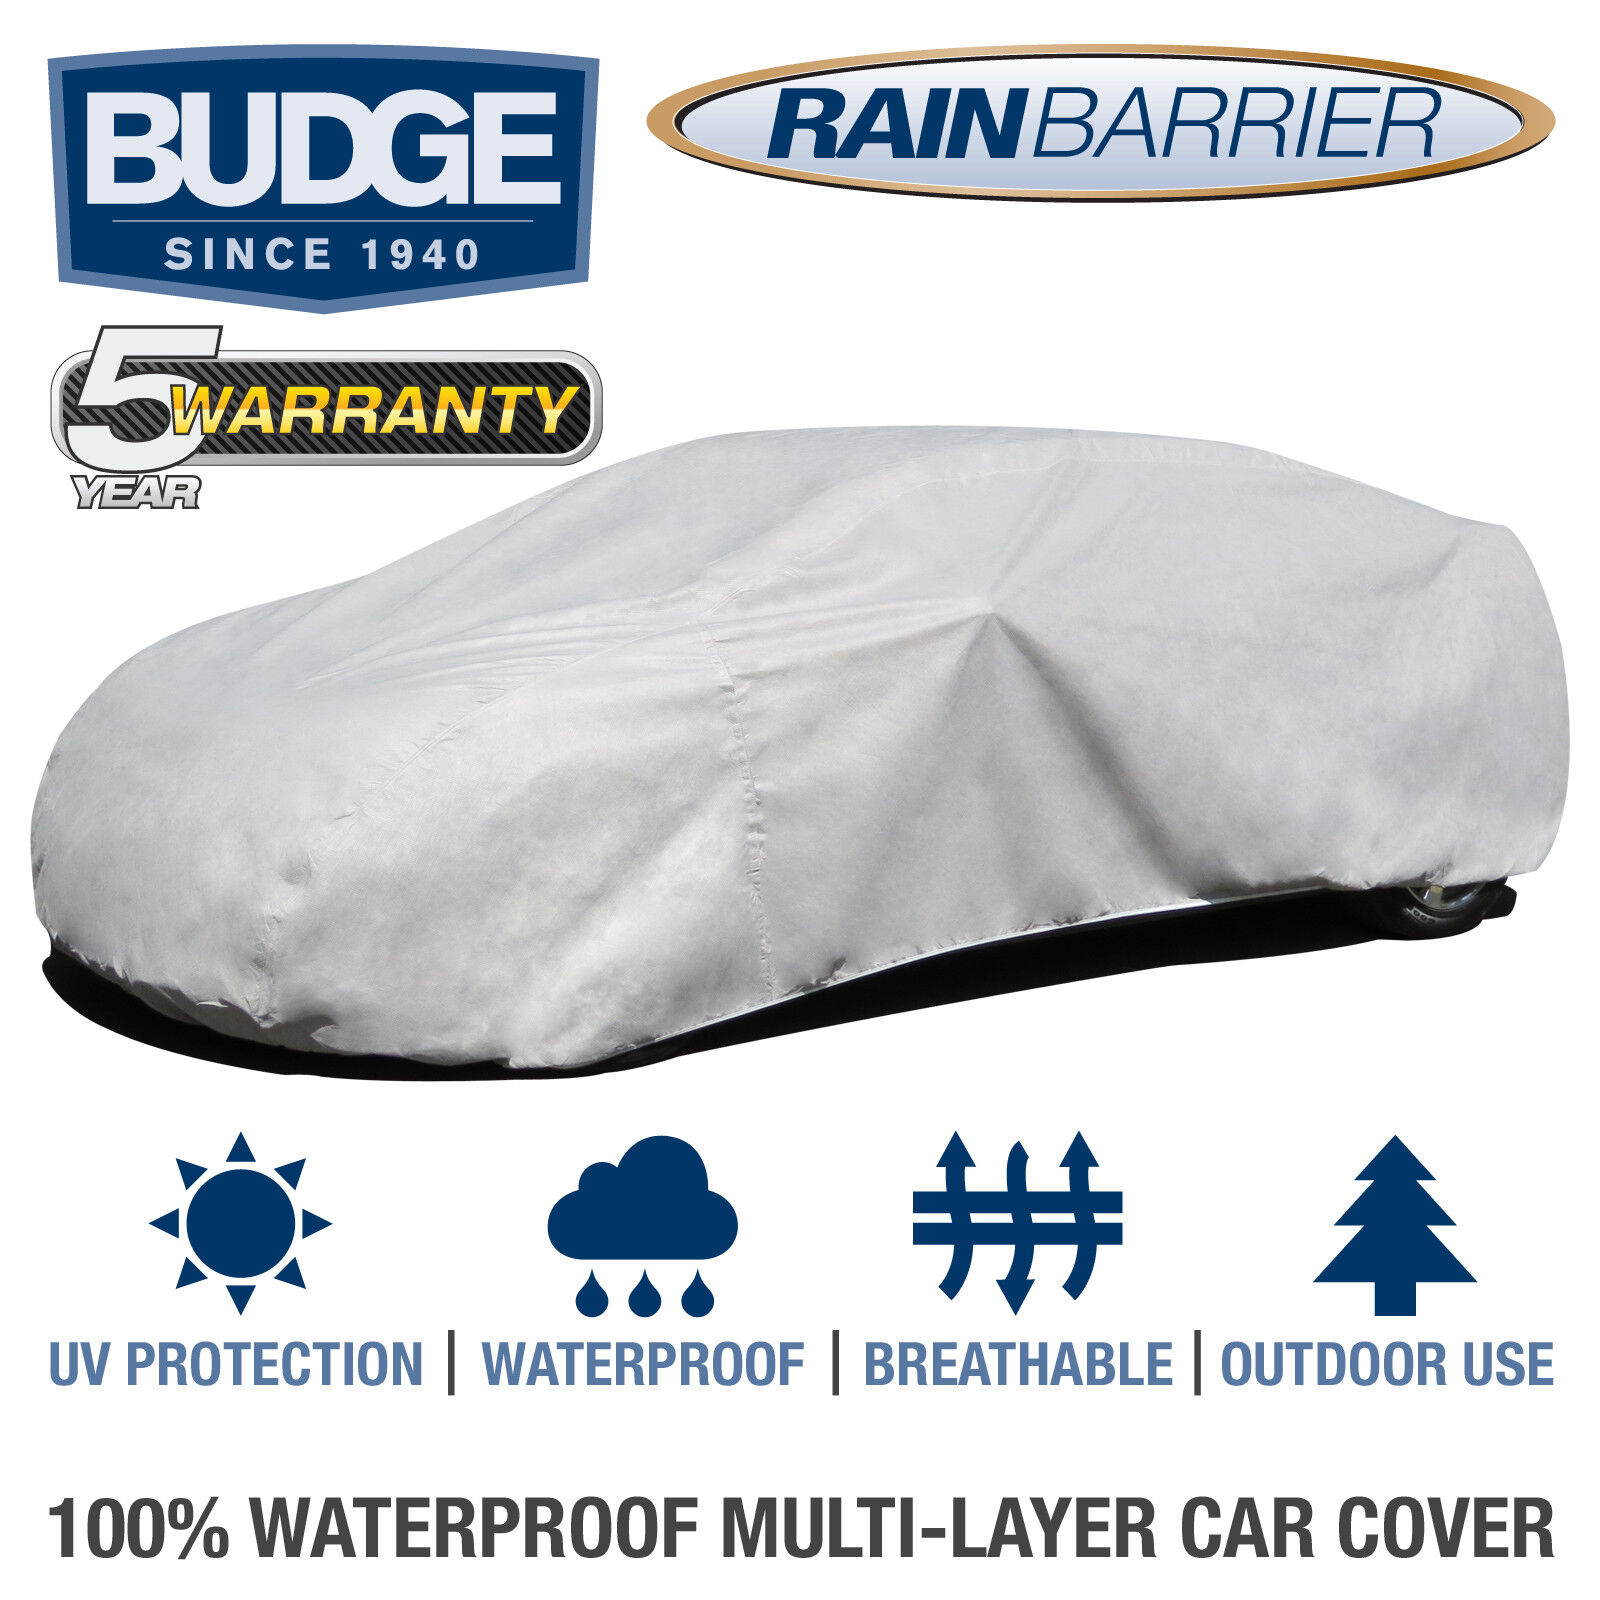 Budge Rain Barrier Car Cover Fits Mazda Miata 1989 | Waterproof | Breathable